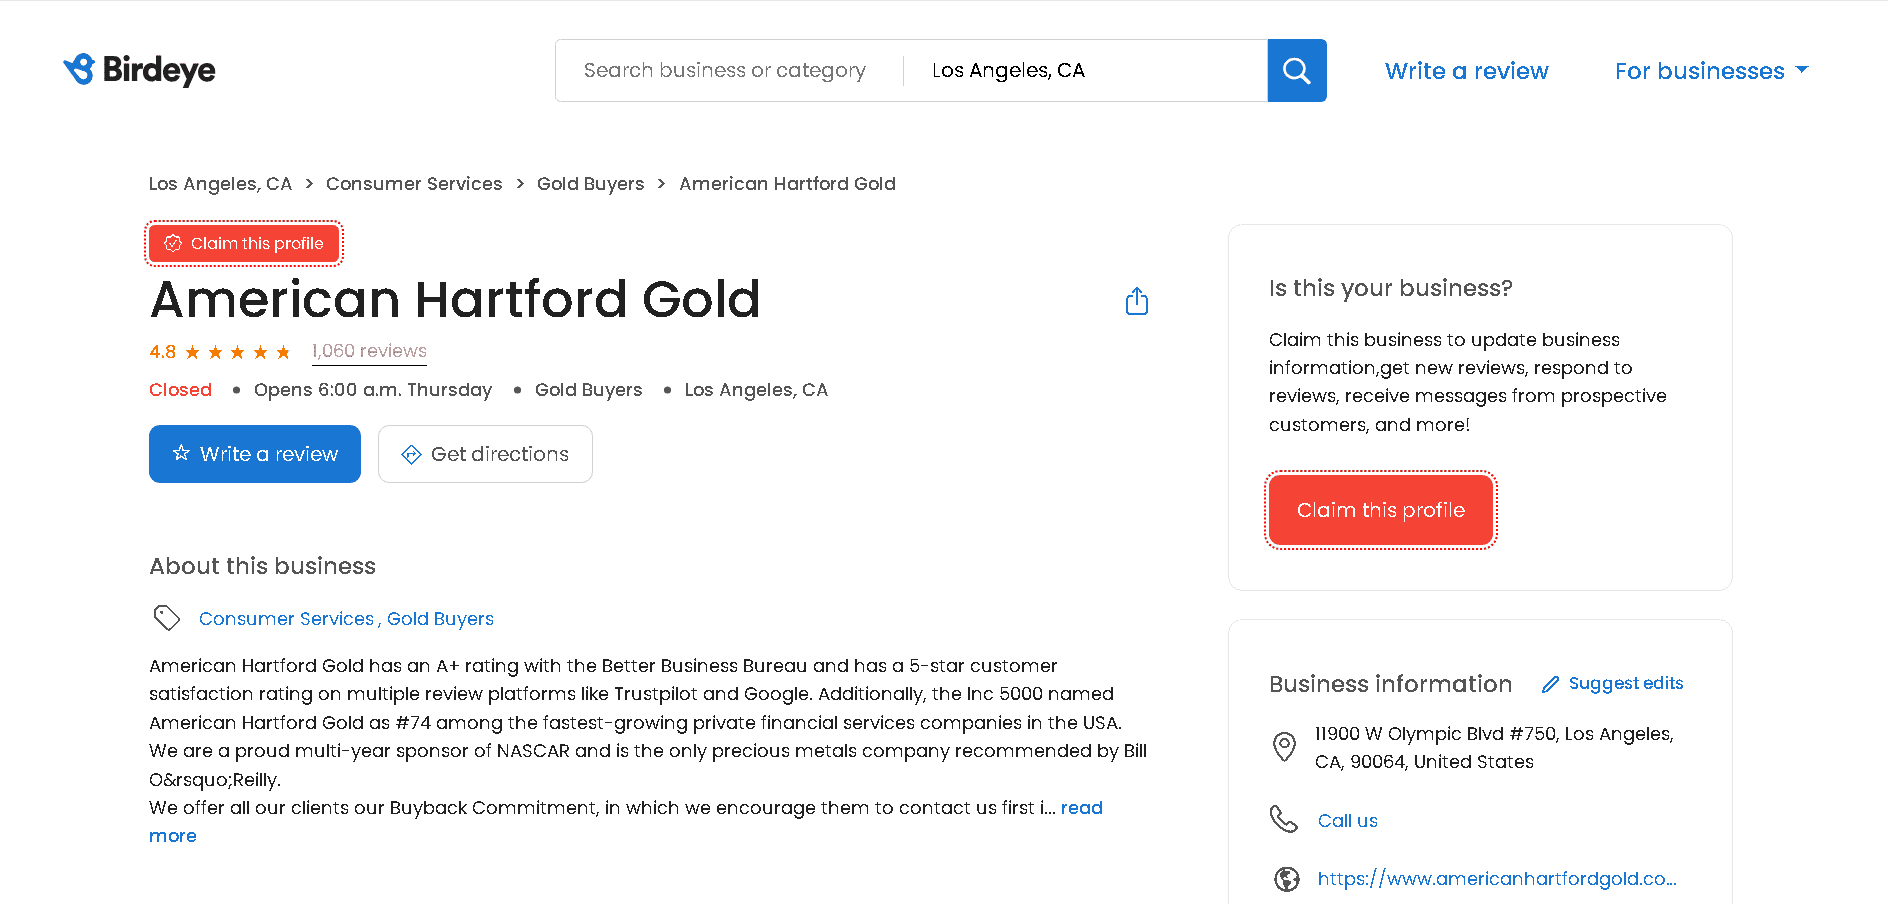 American Hartford Gold Birdeye profile and customer reviews